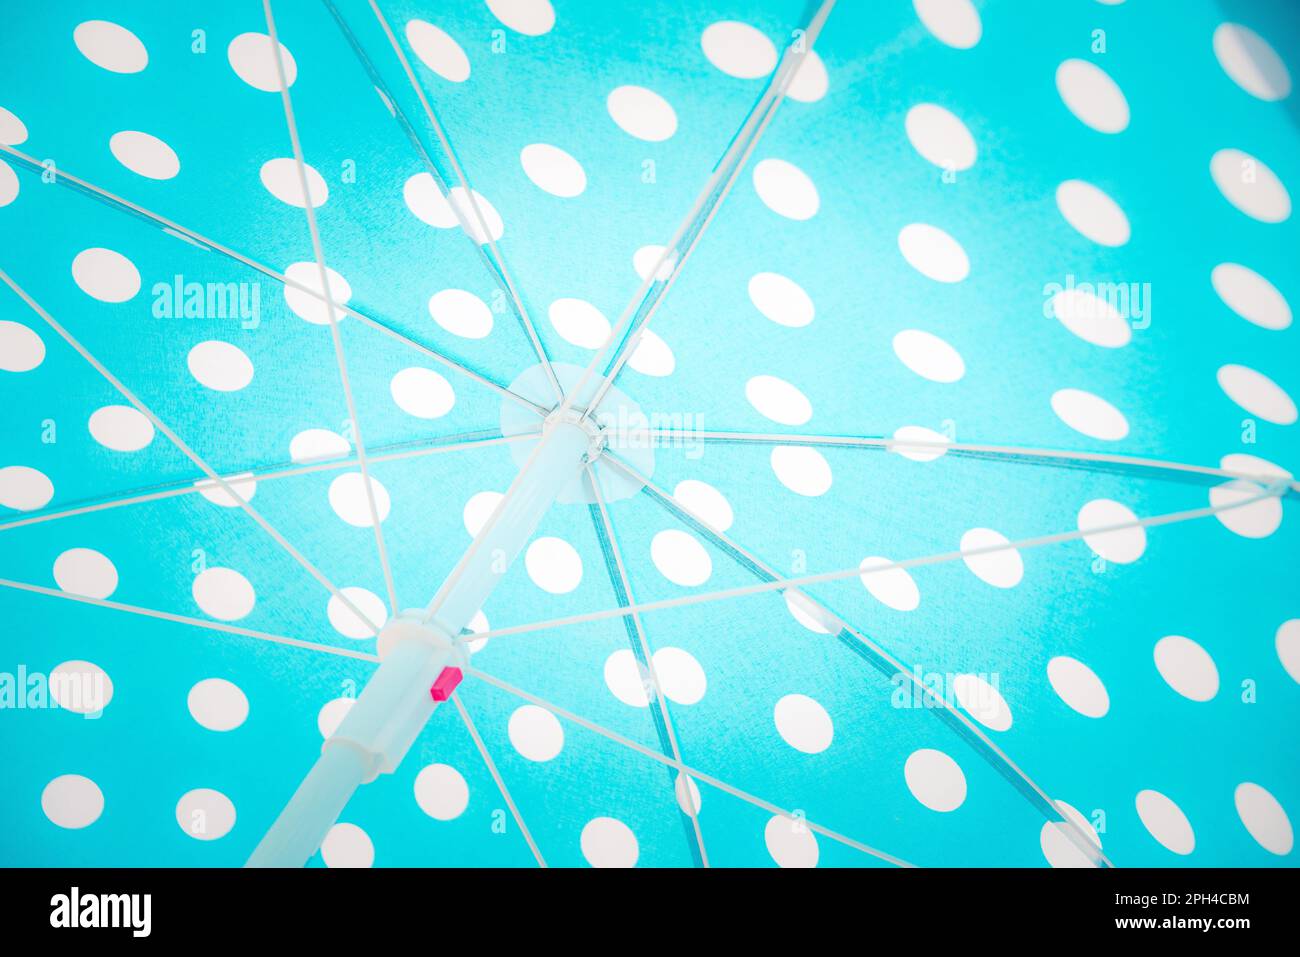 Close upward view of a blue dotted beach umbrella. Stock Photo